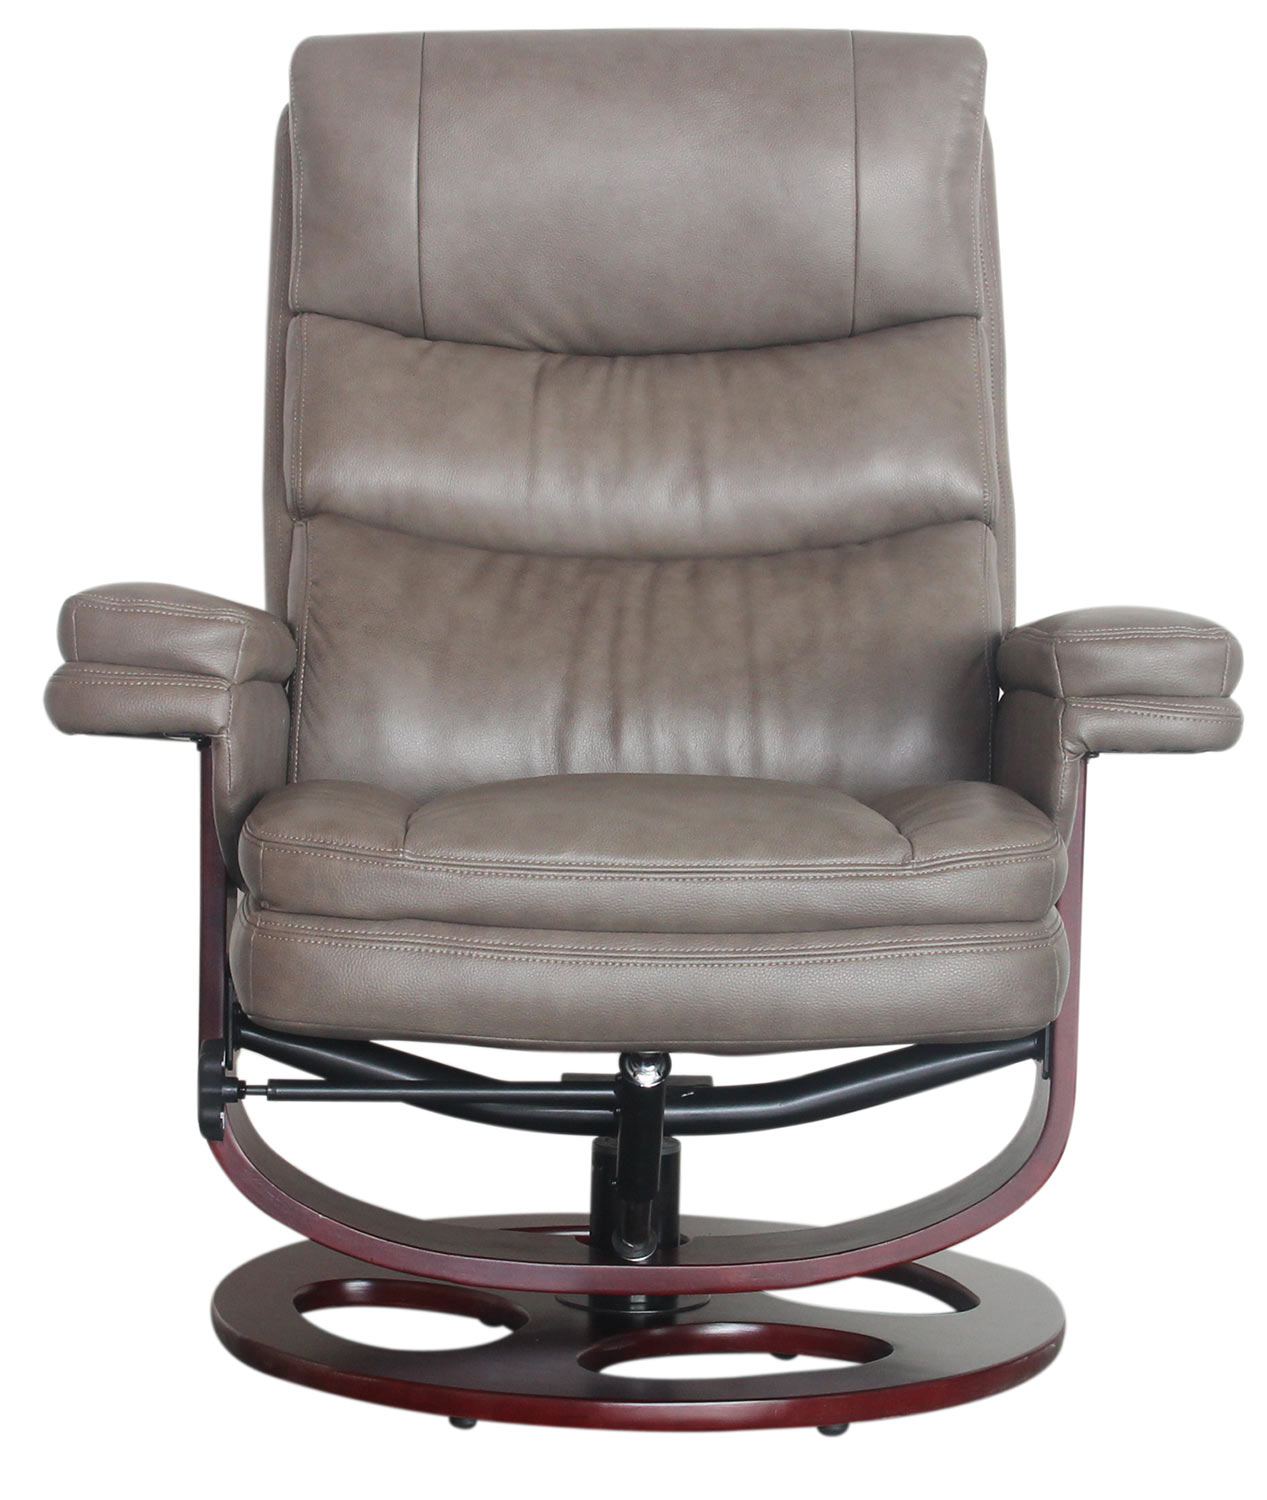 Barcalounger Bella Pedestal Recliner Chair and Ottoman - Chelsea Cobblestone/Leather Match